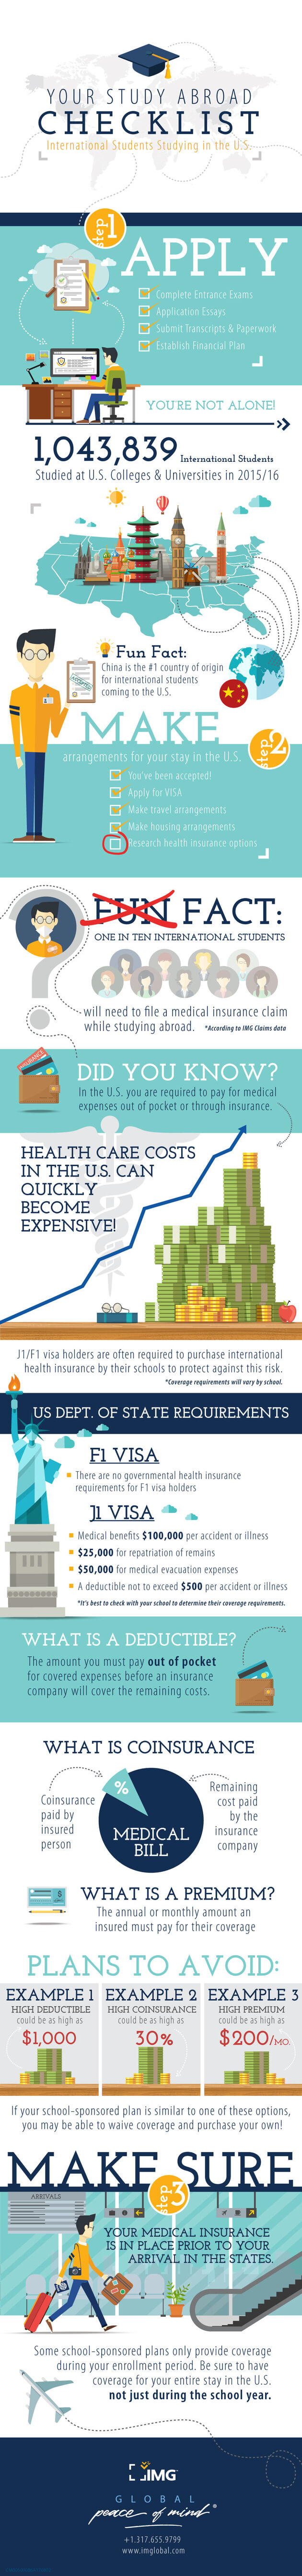 International Student Health Insurance Infographic